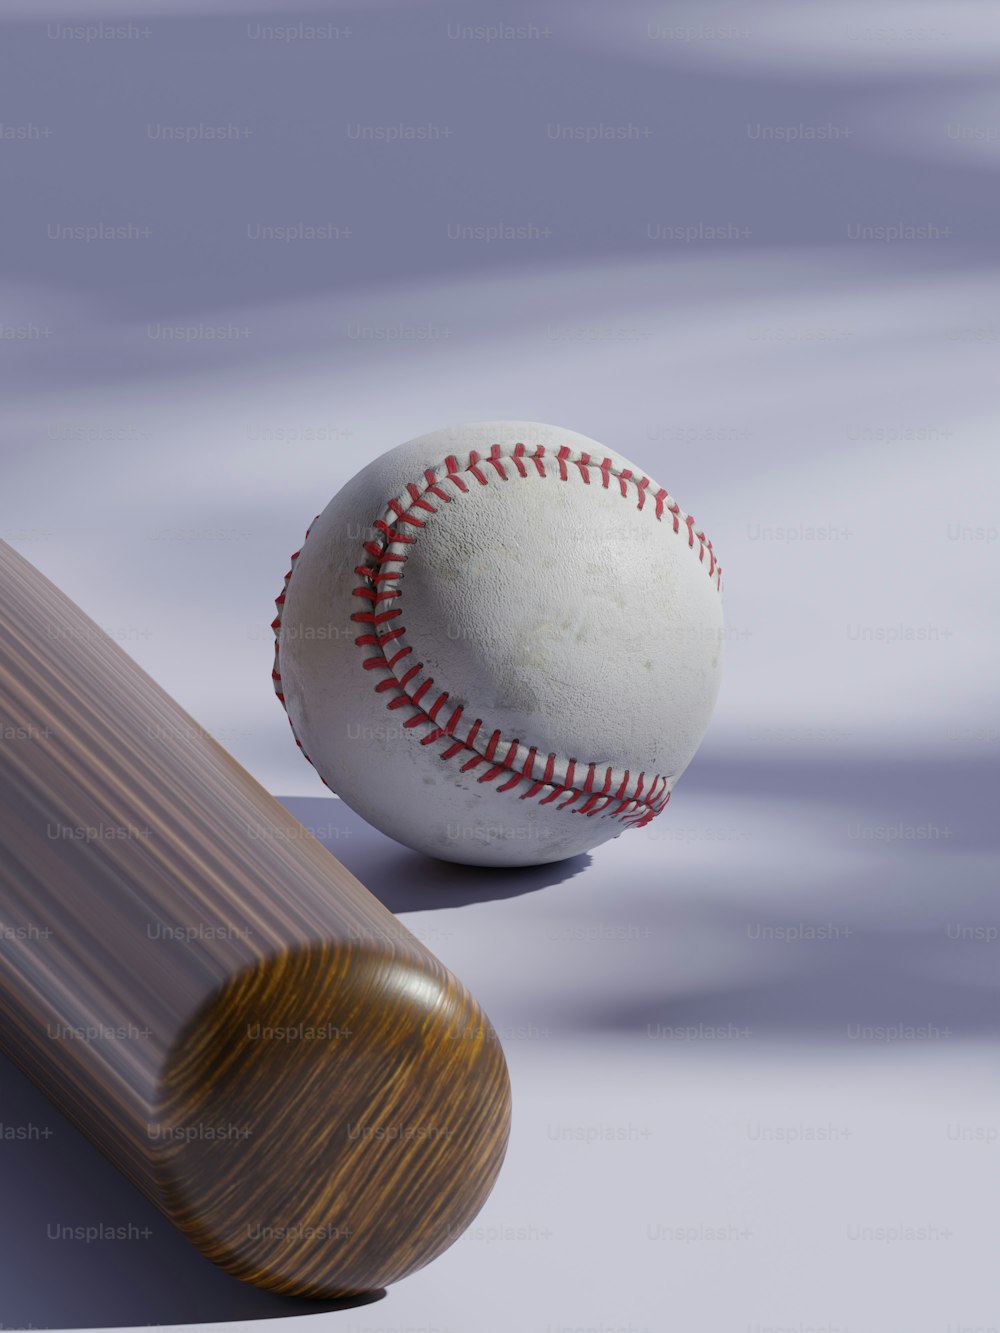 a baseball bat and a baseball on a white surface